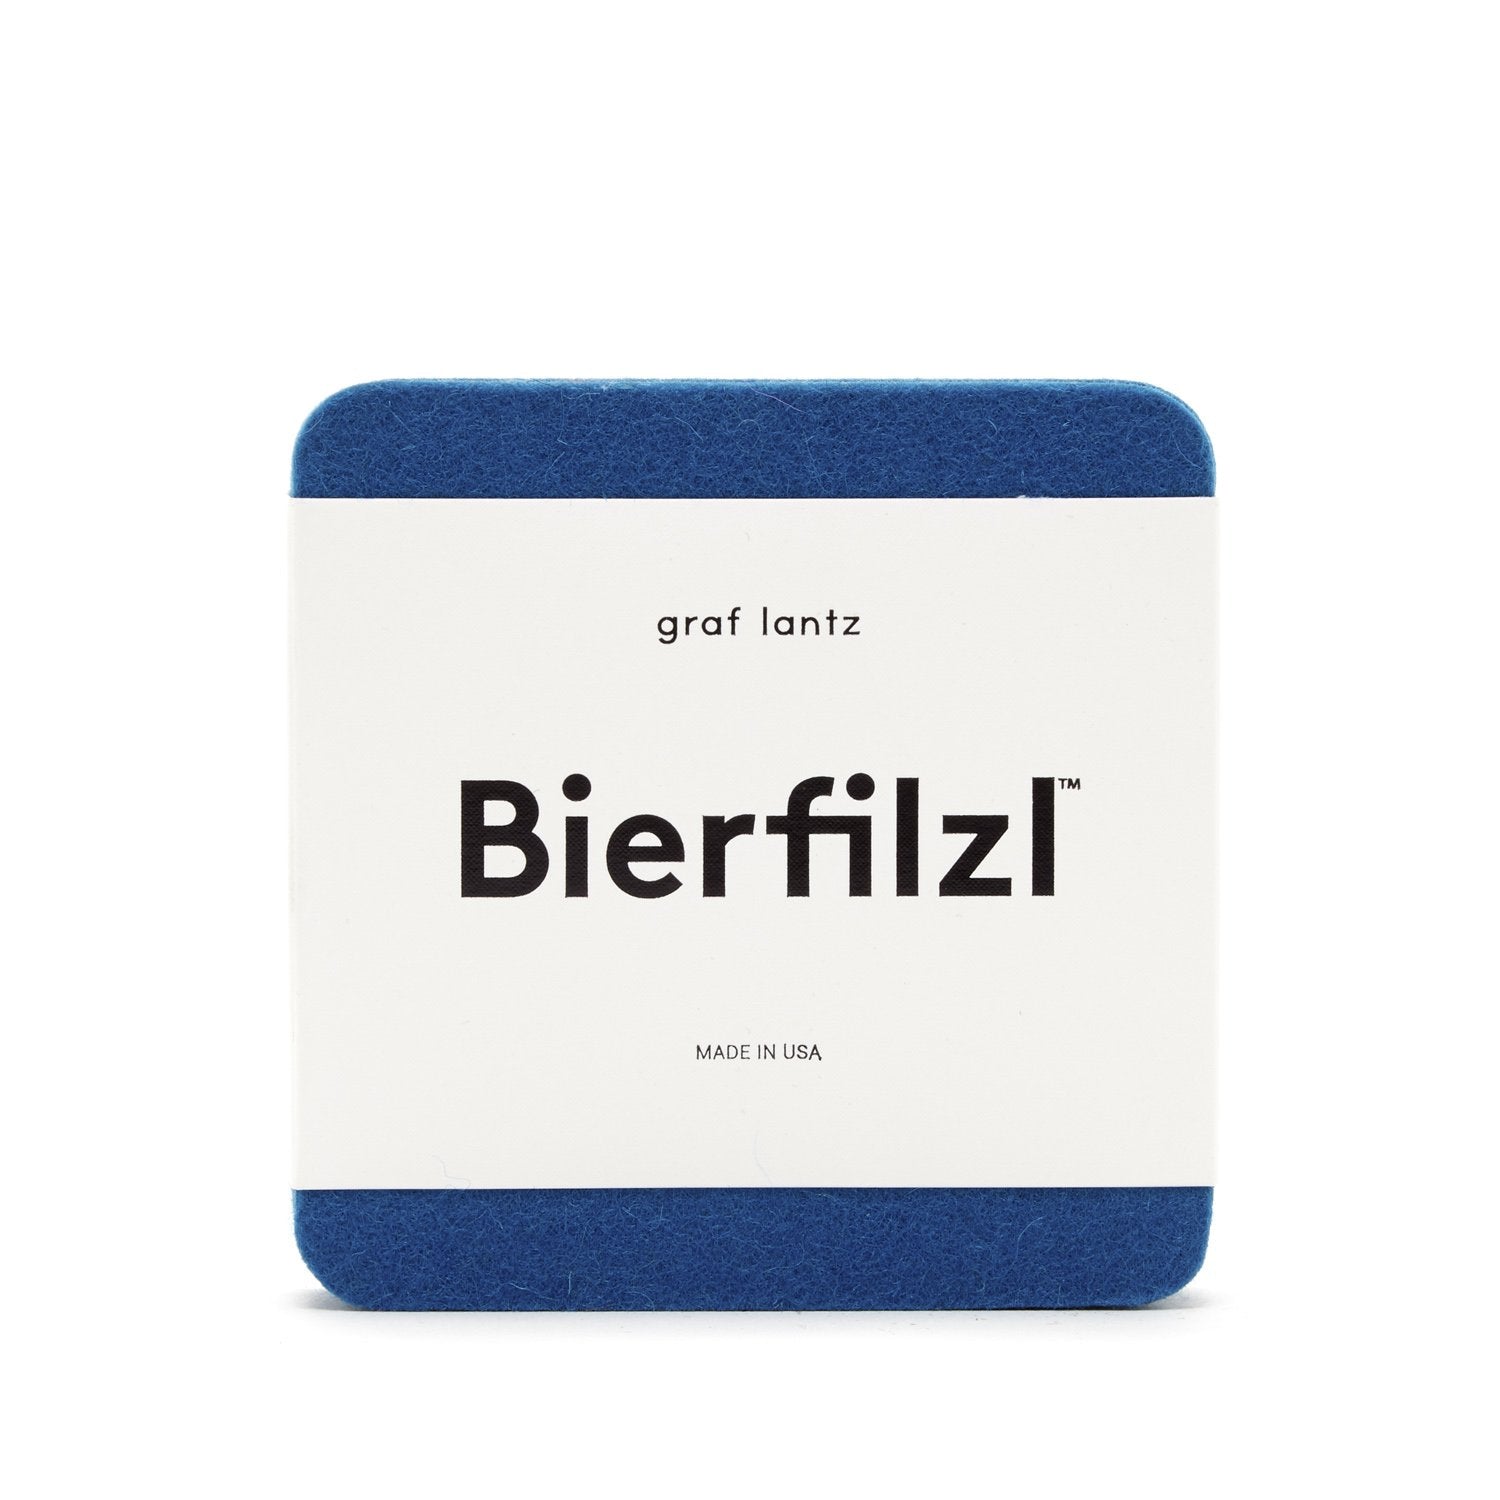 bierfilzl blue felt coaster